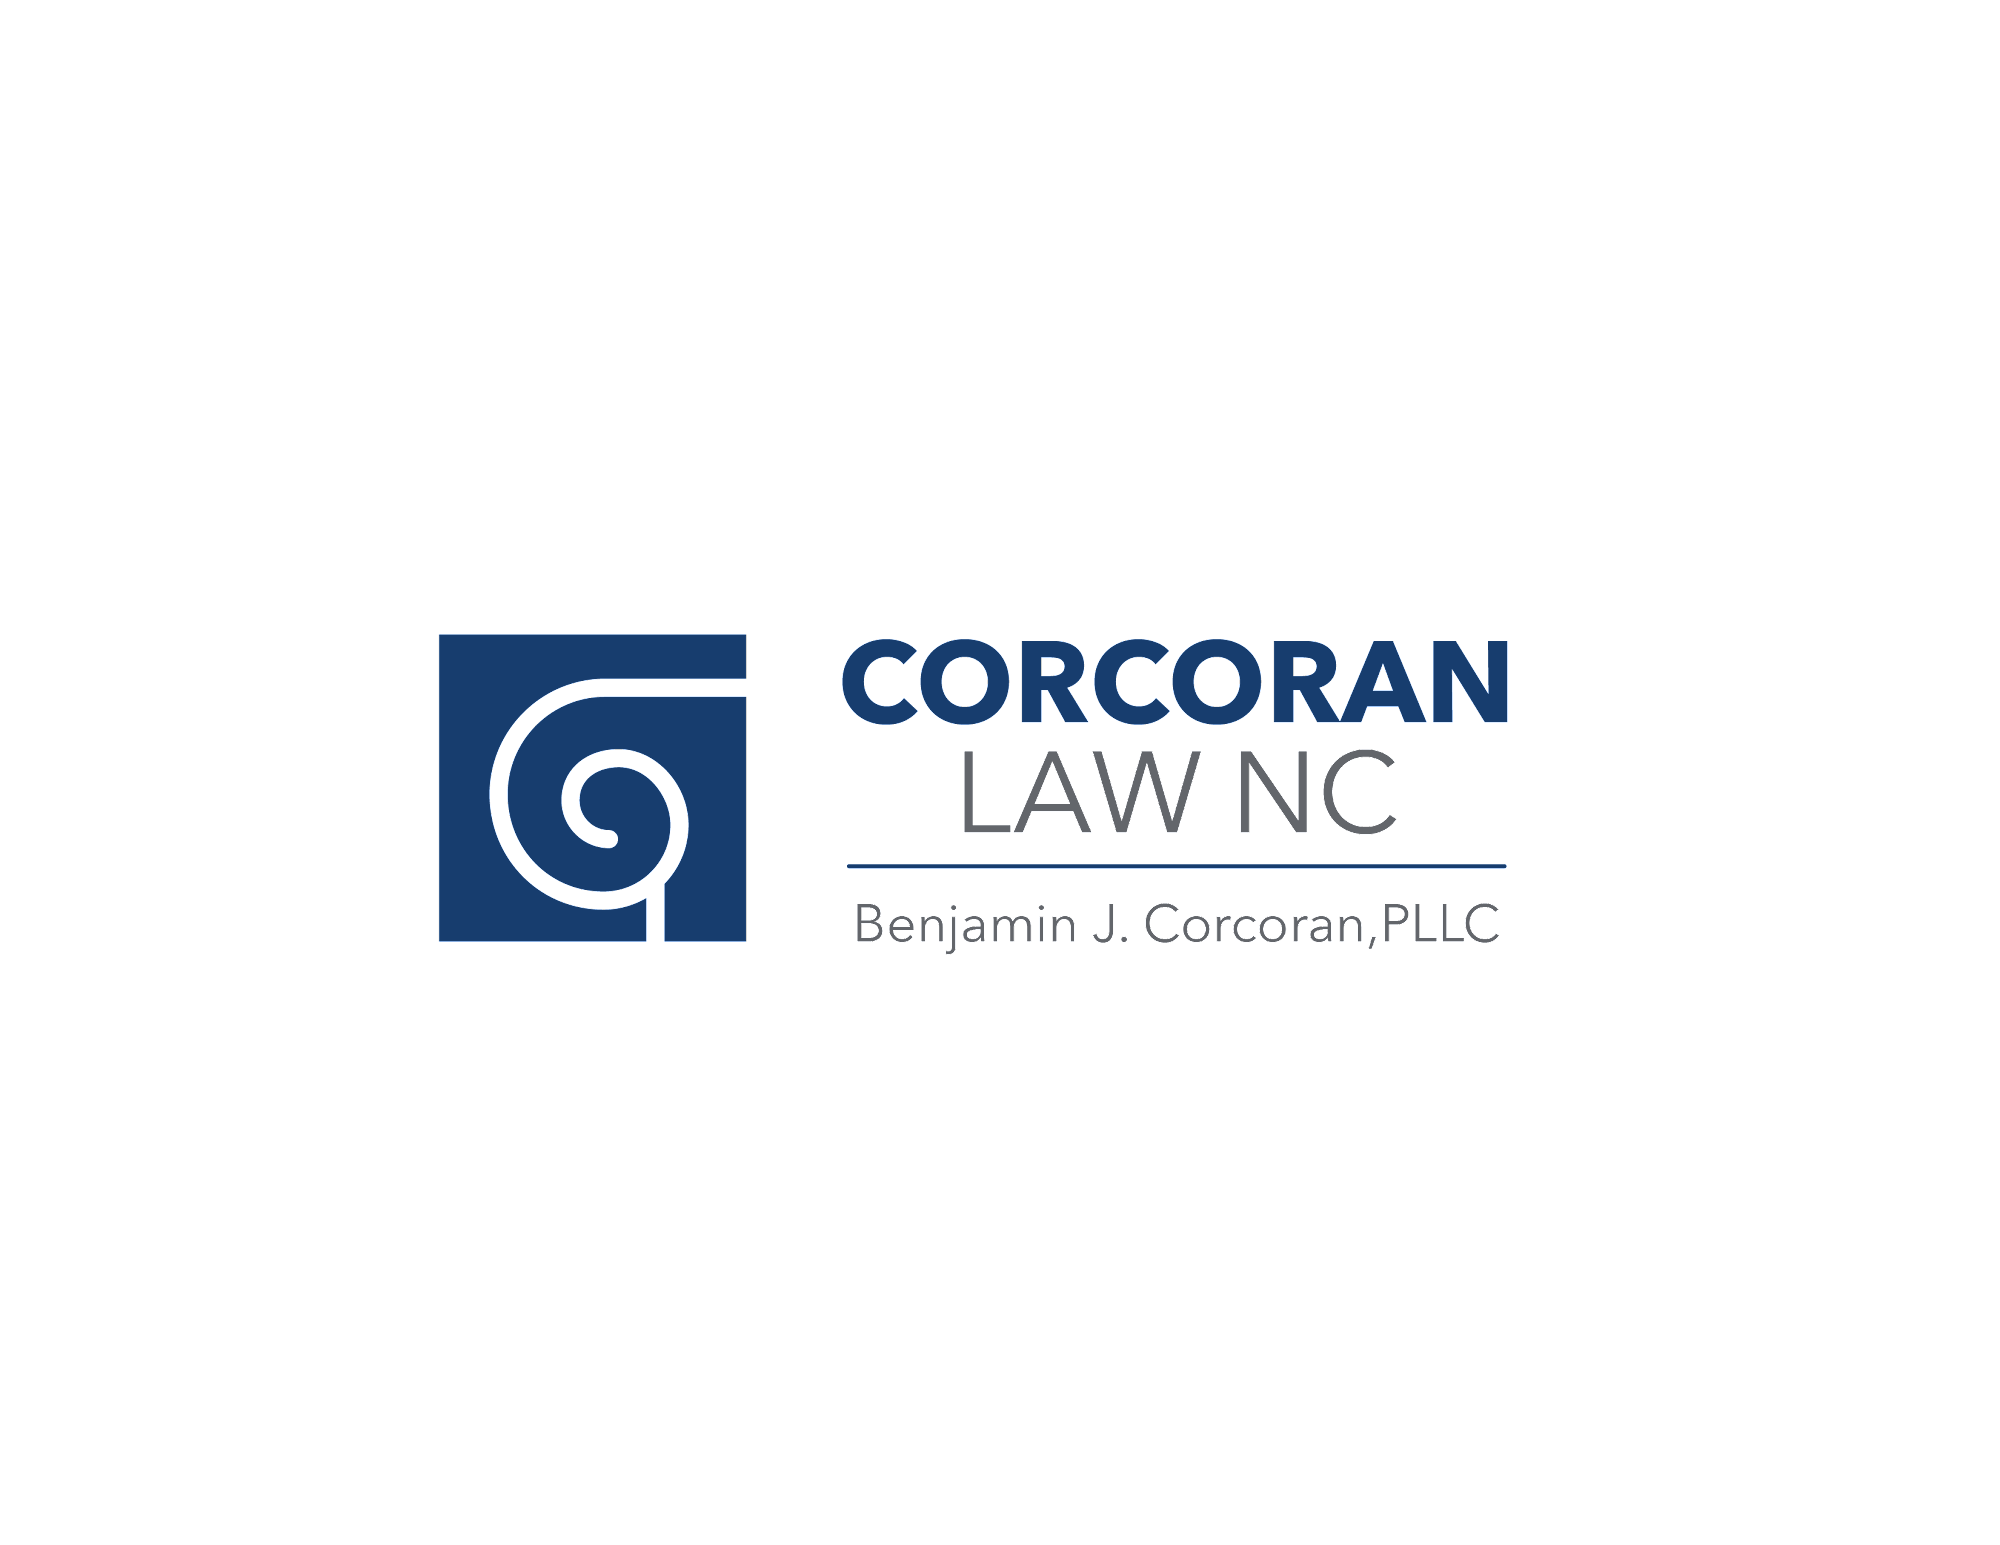 Corcoran Law NC - Benjamin J Corcoran, PLLC 418 S State St, Yadkinville North Carolina 27055